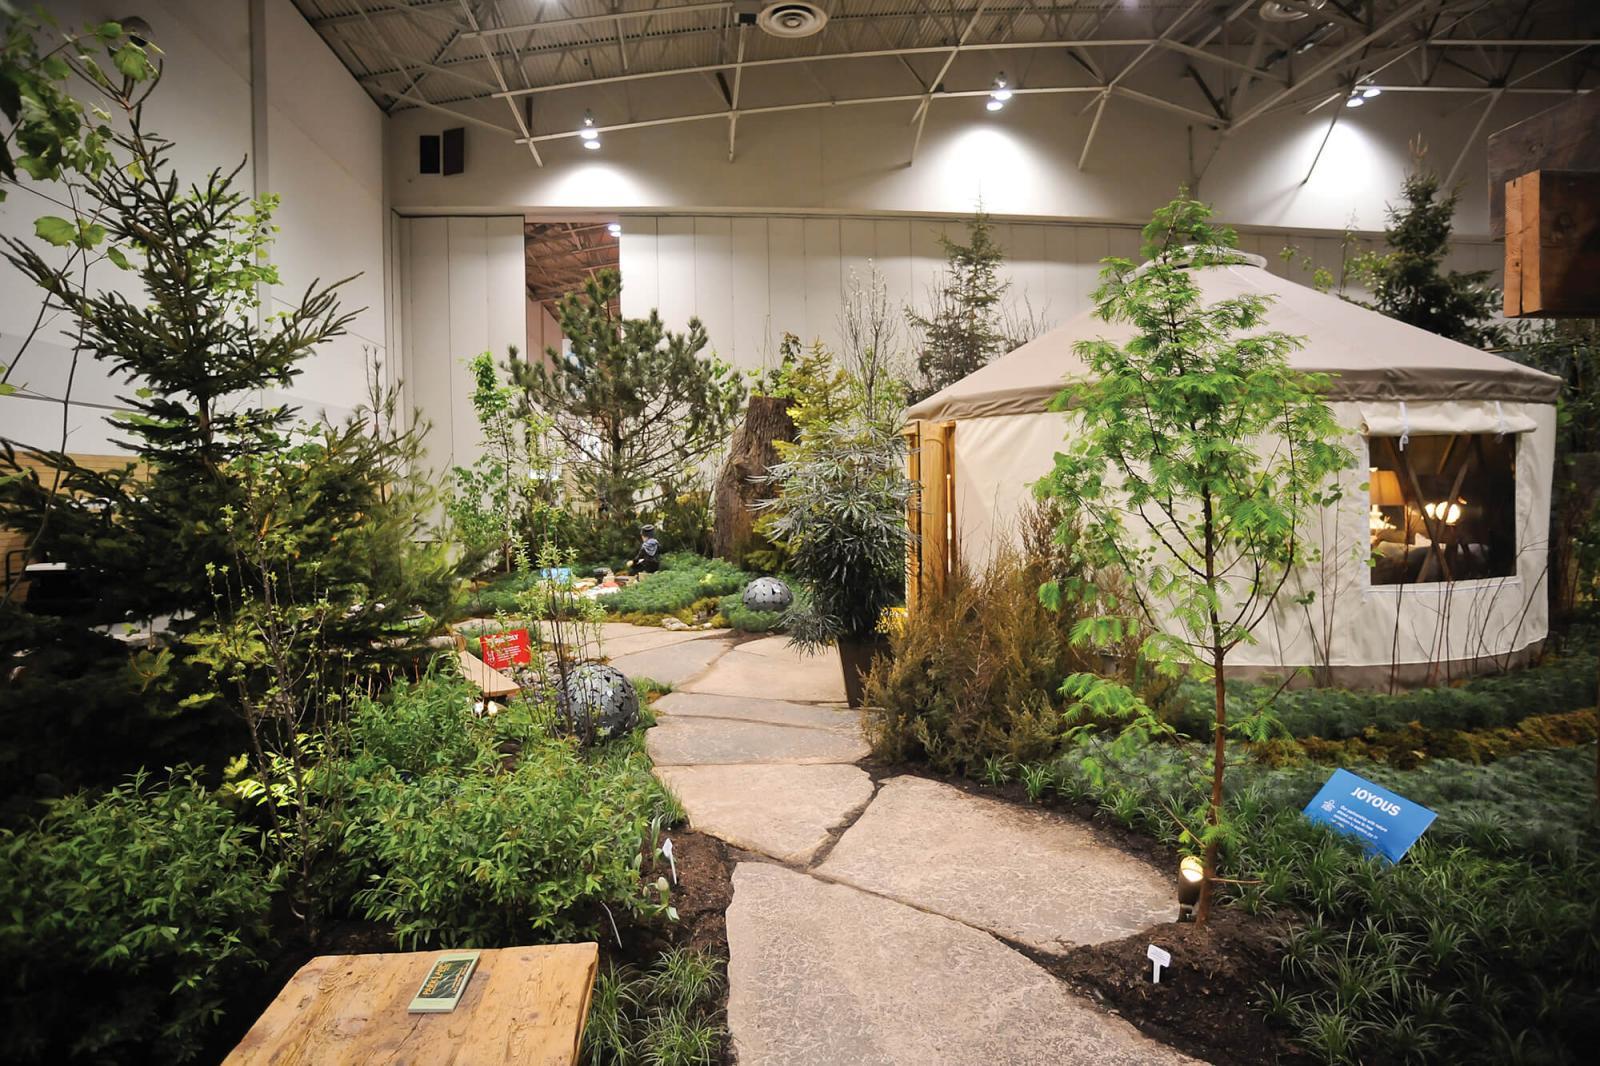 Canada Blooms 2014 feature garden winners